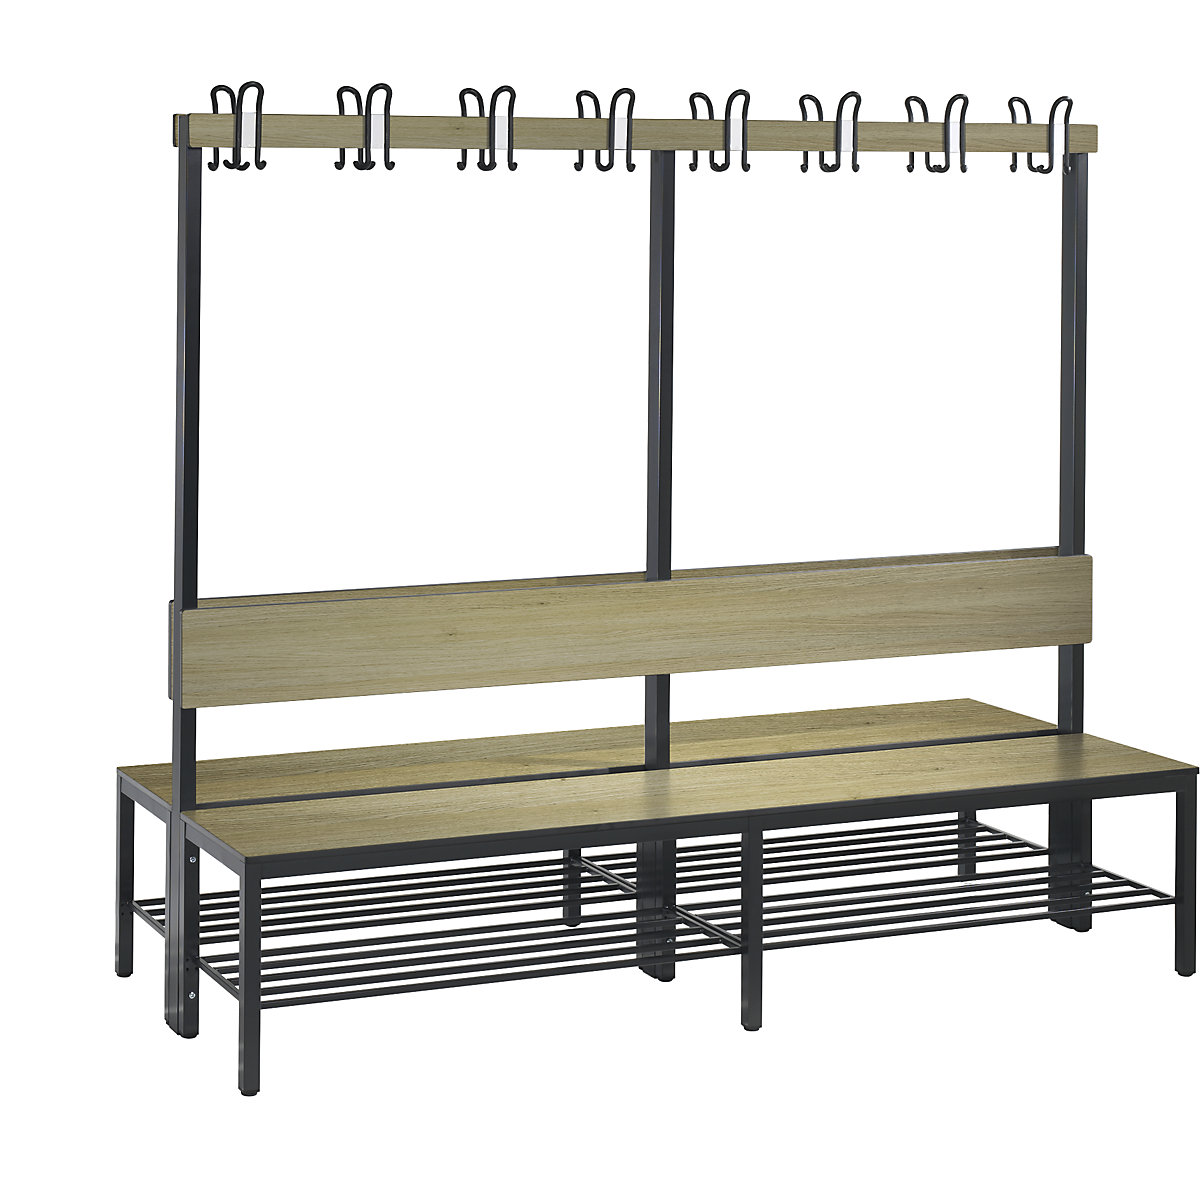 BASIC PLUS cloakroom bench, double sided – C+P, seat HPL, hook rail, shoe rack, length 1960 mm, oak finish-5